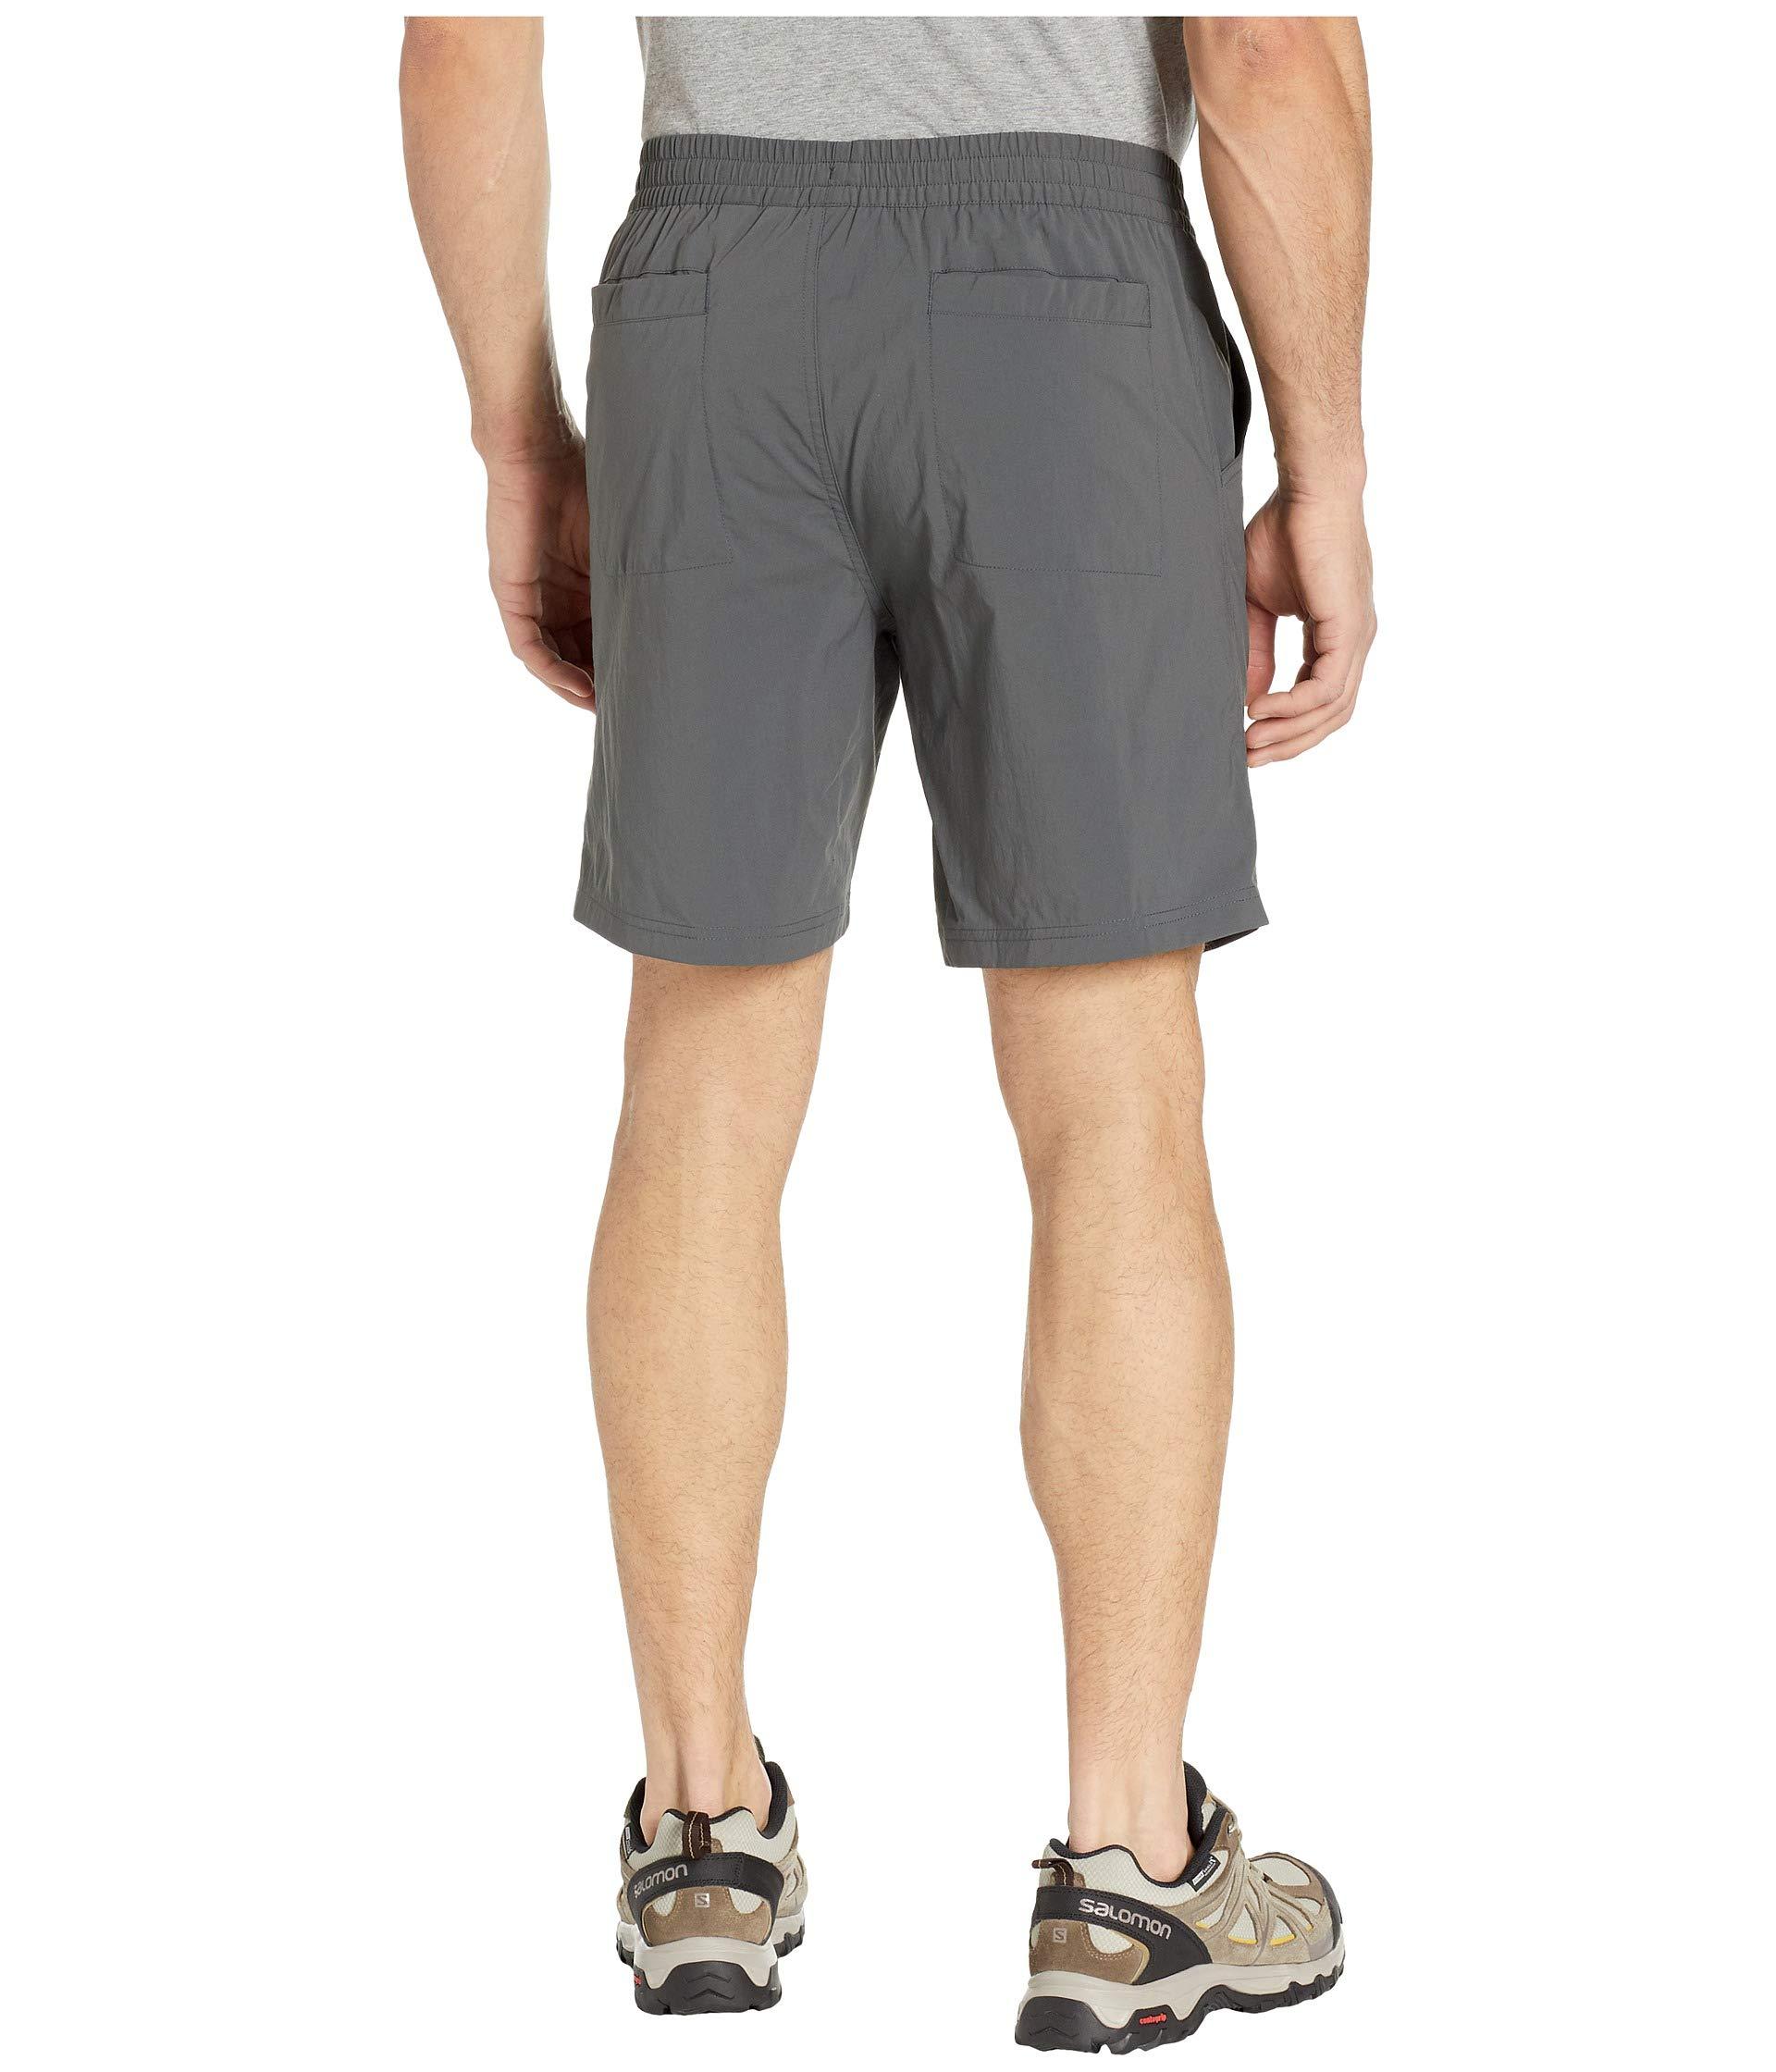 Marmot Synthetic Allomare Shorts in Slate Grey (Gray) for Men - Lyst